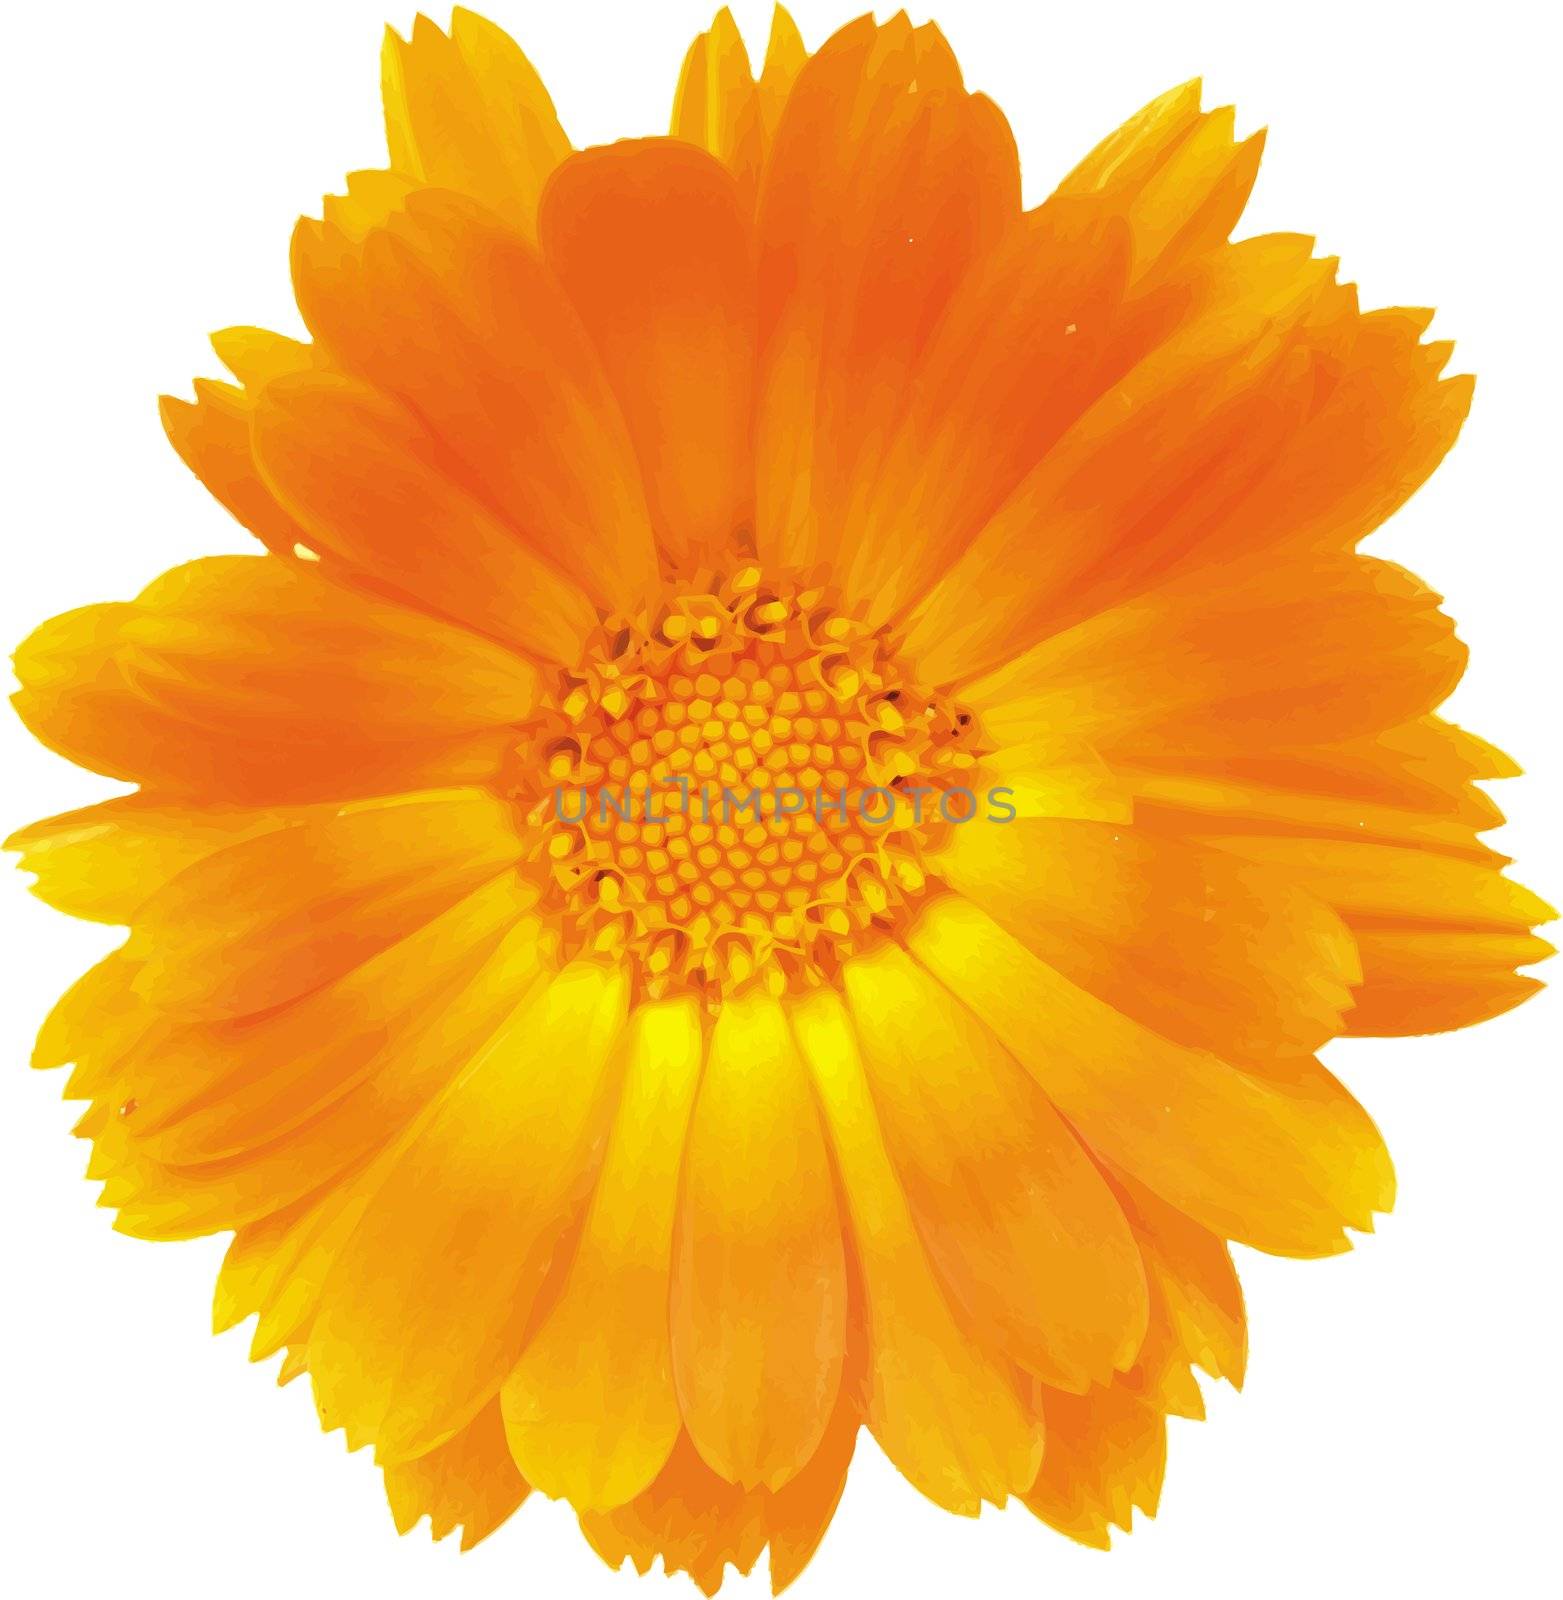 Flower of a calendula of orange color close up.